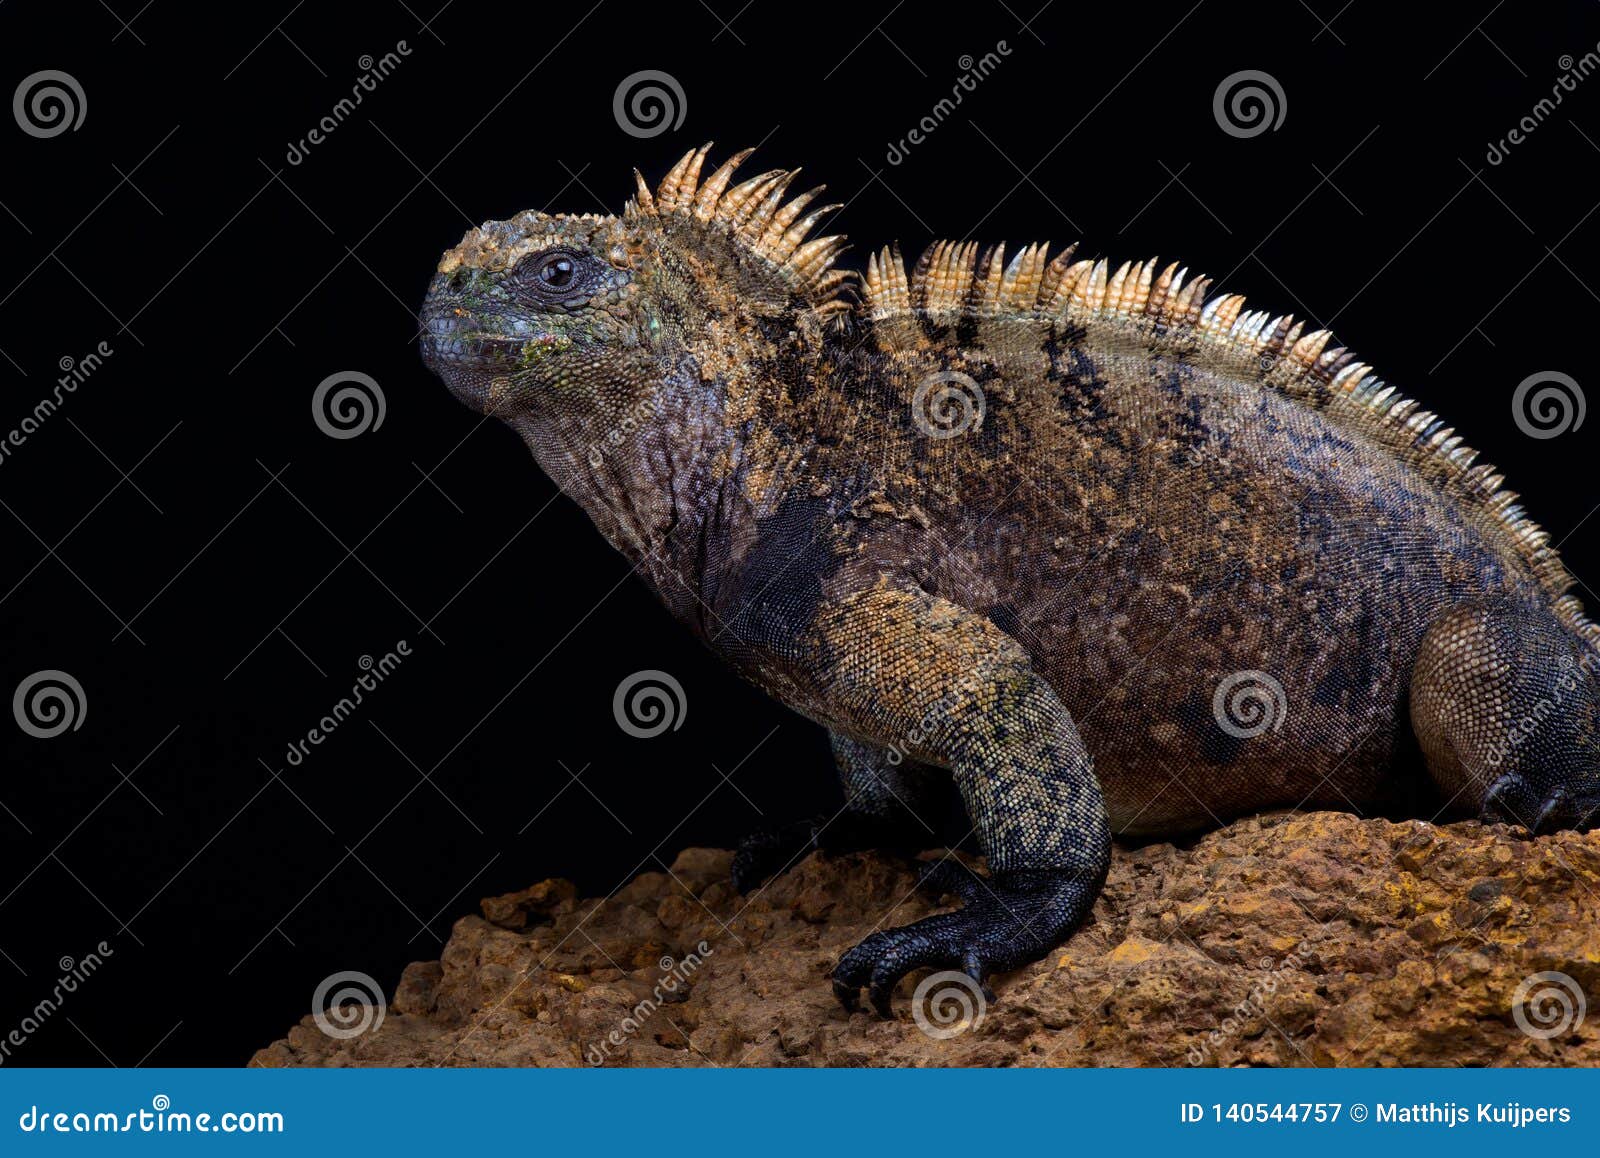 marine iguana amblyrhynchus cristatus hassi